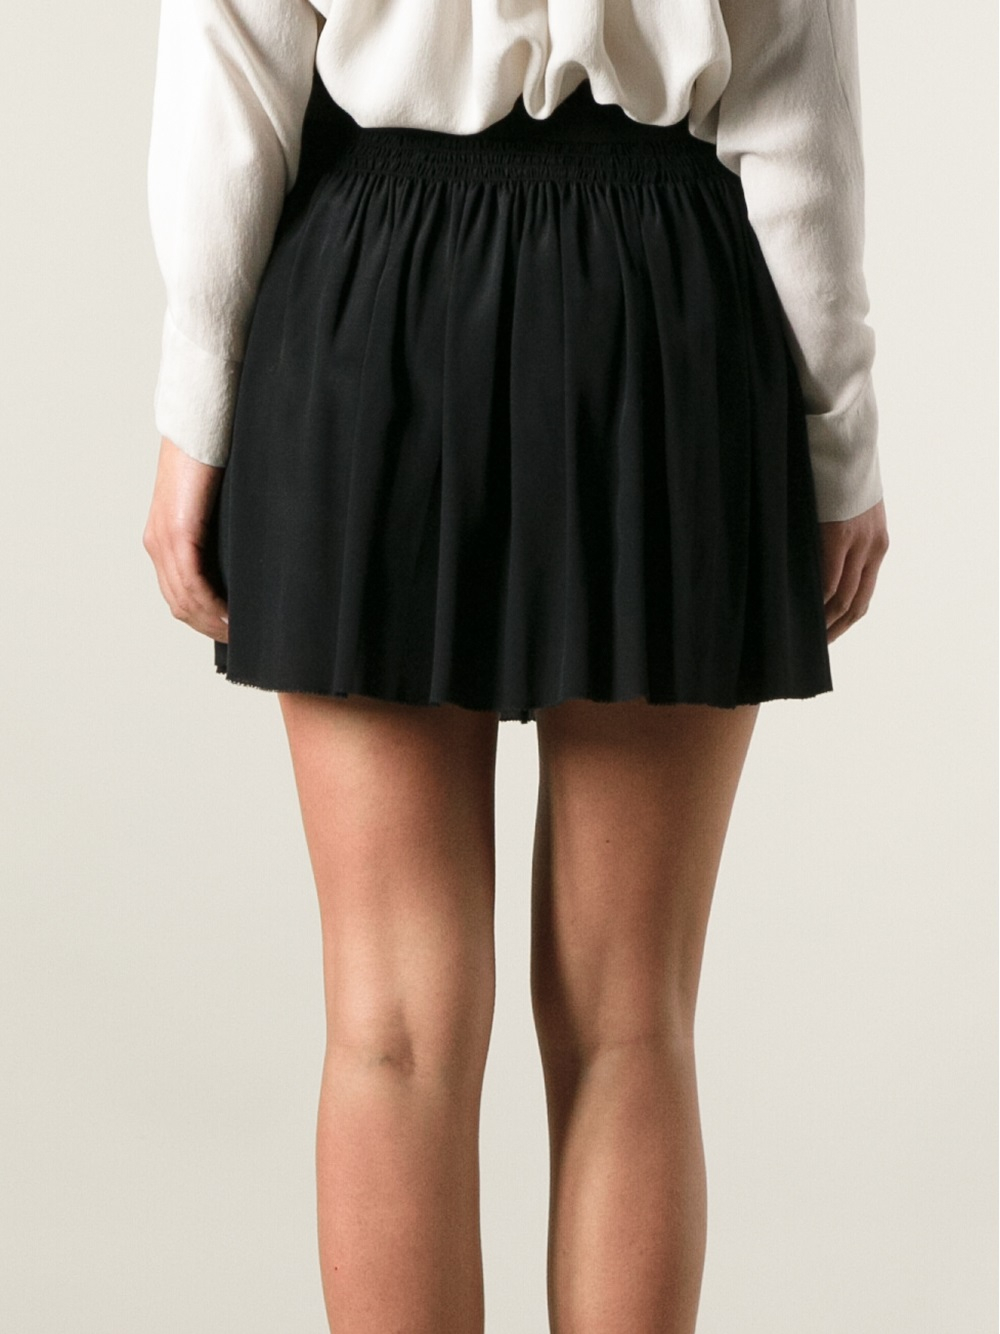 Lyst - Vanessa Bruno Pleated Short Skirt in Black